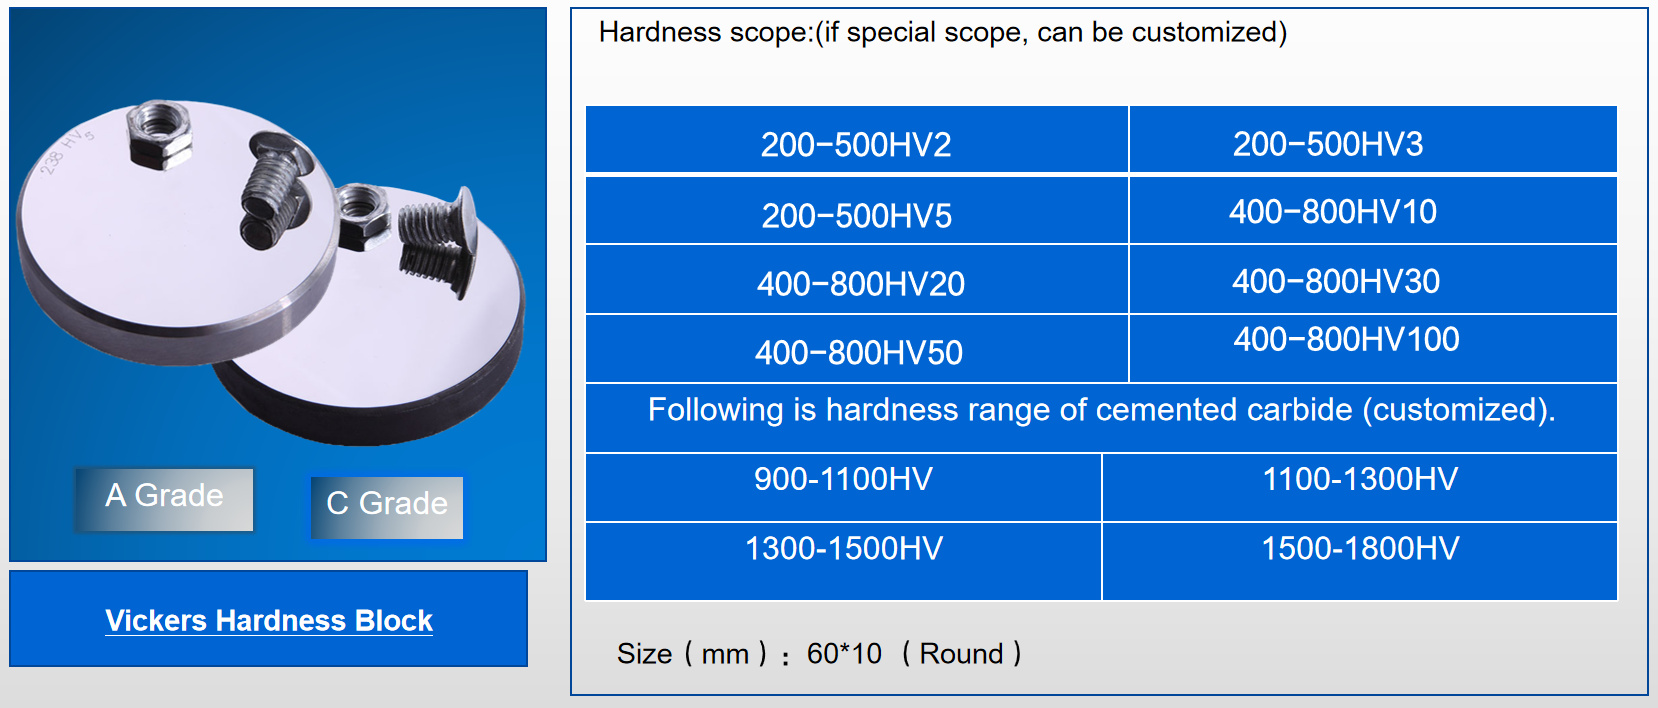 Hardness scope